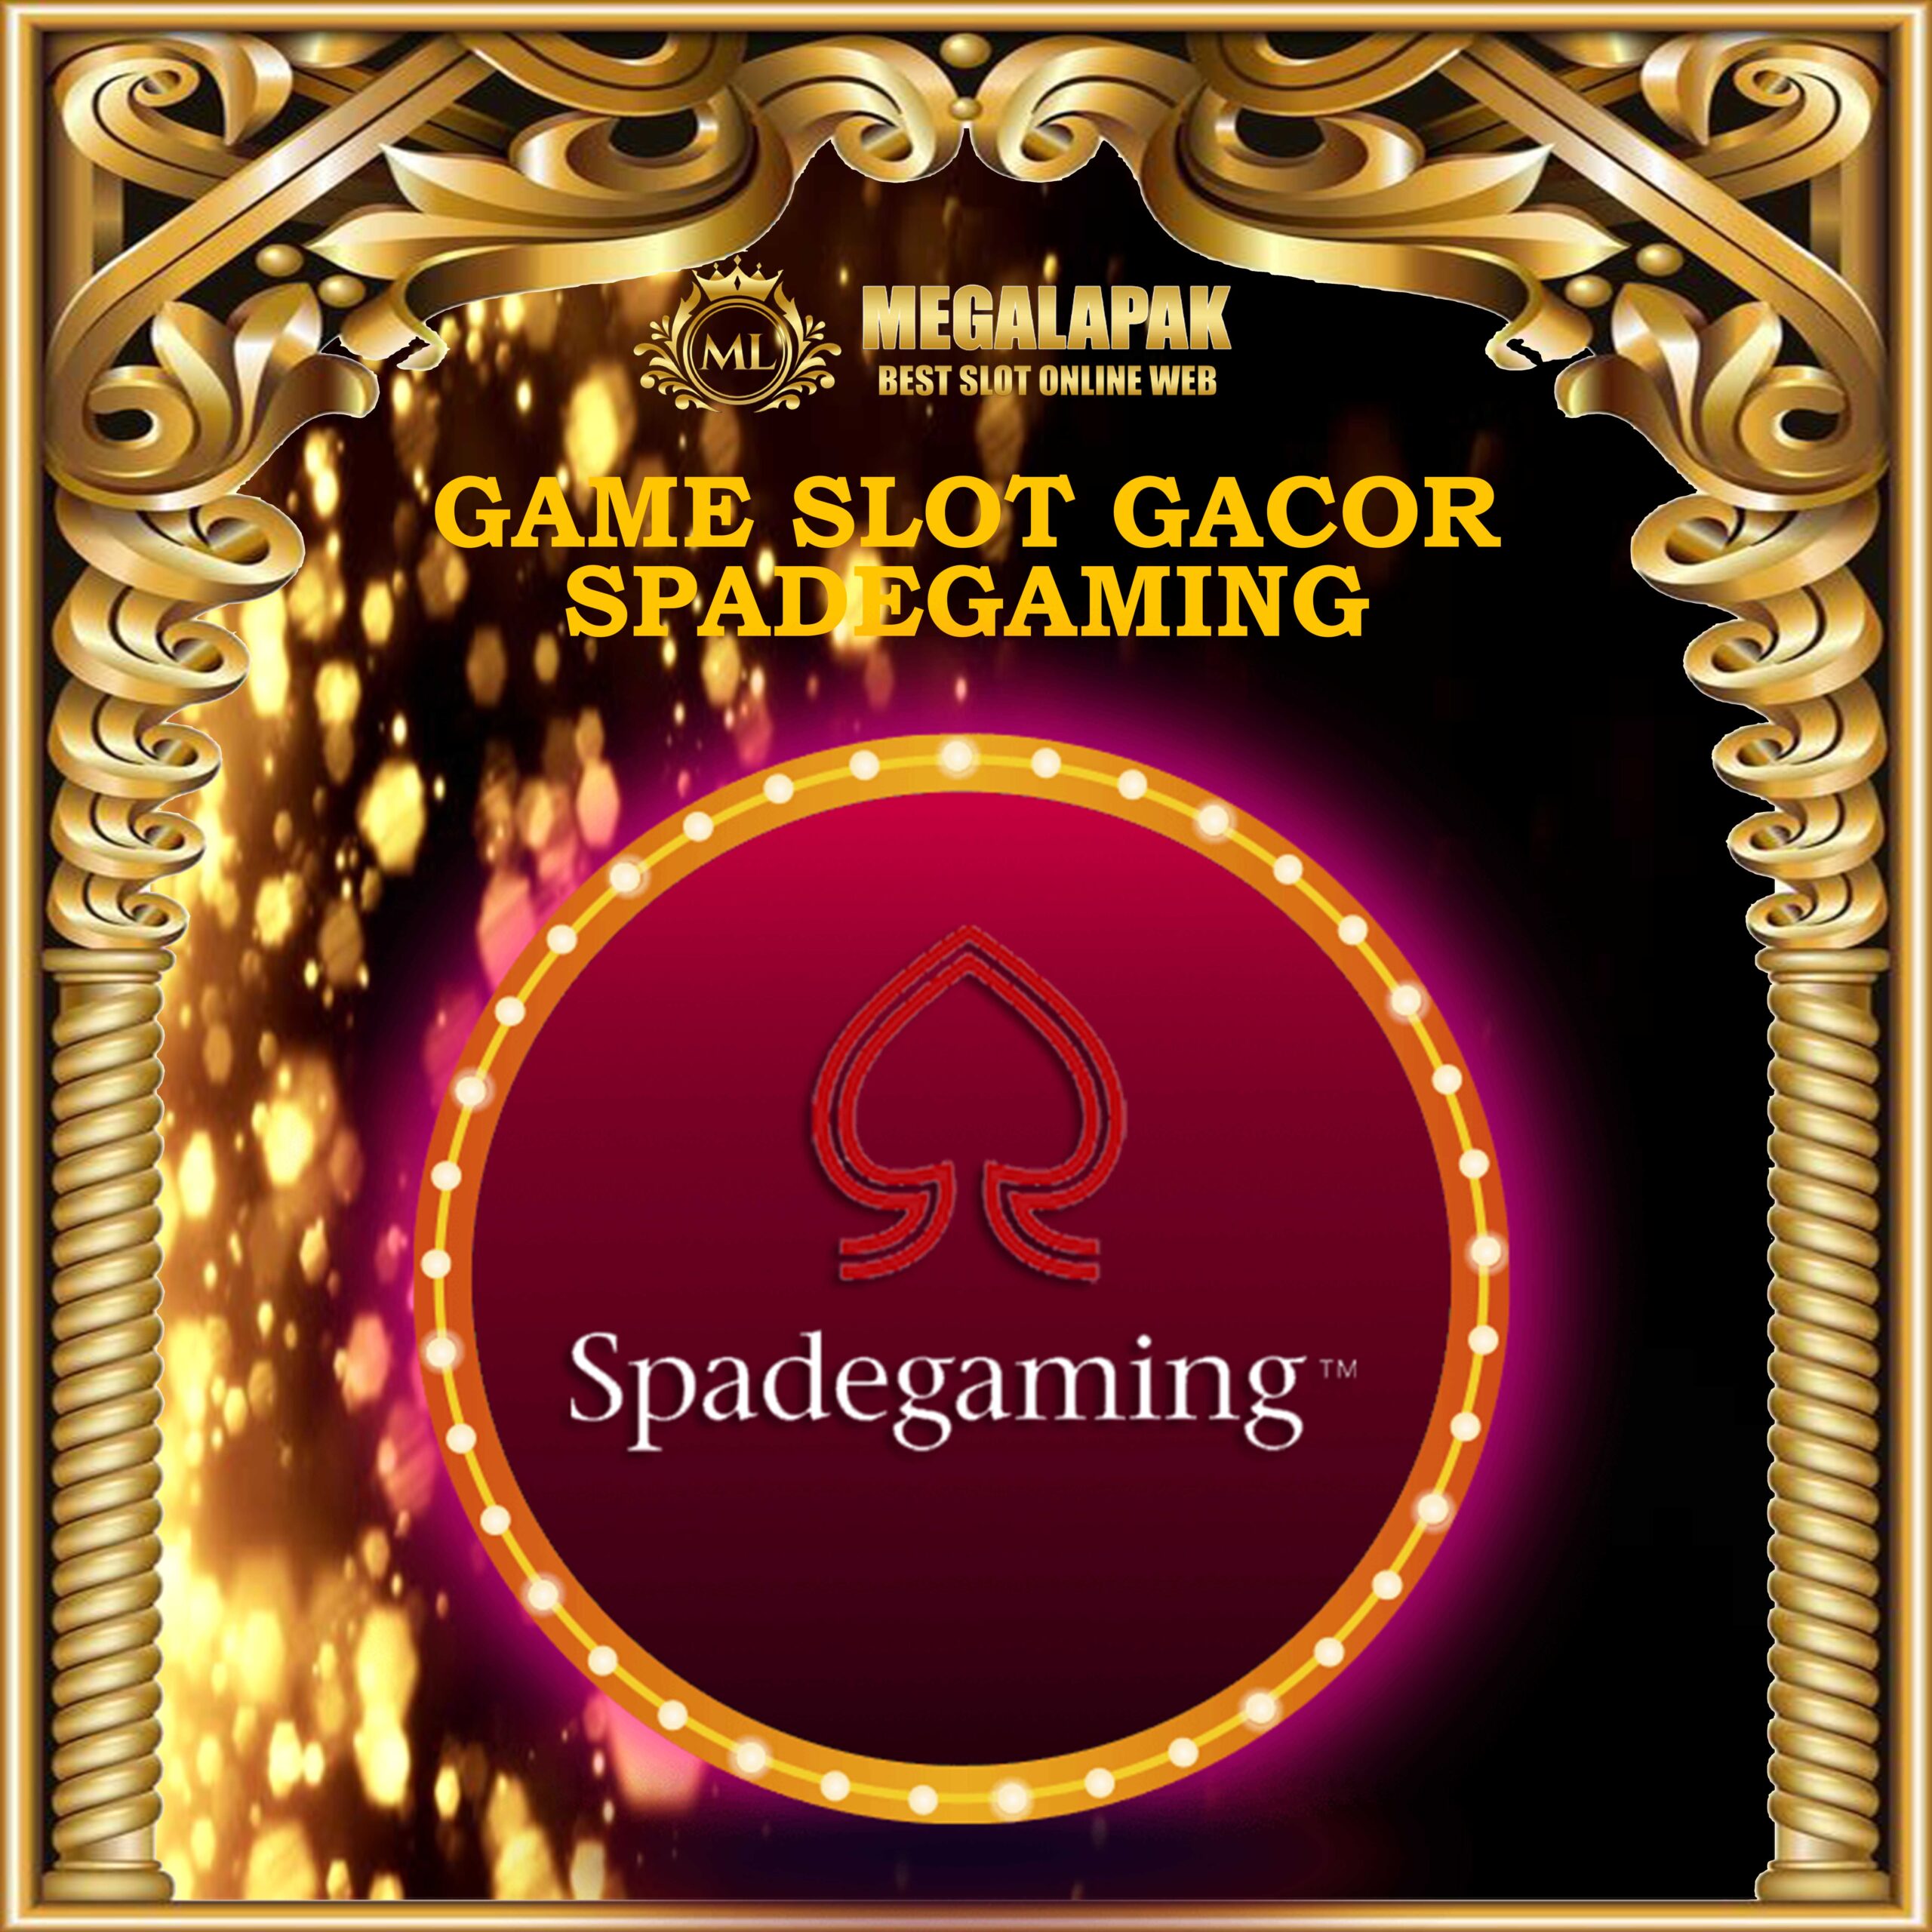 Slot Gacor Spadegaming Megalapak